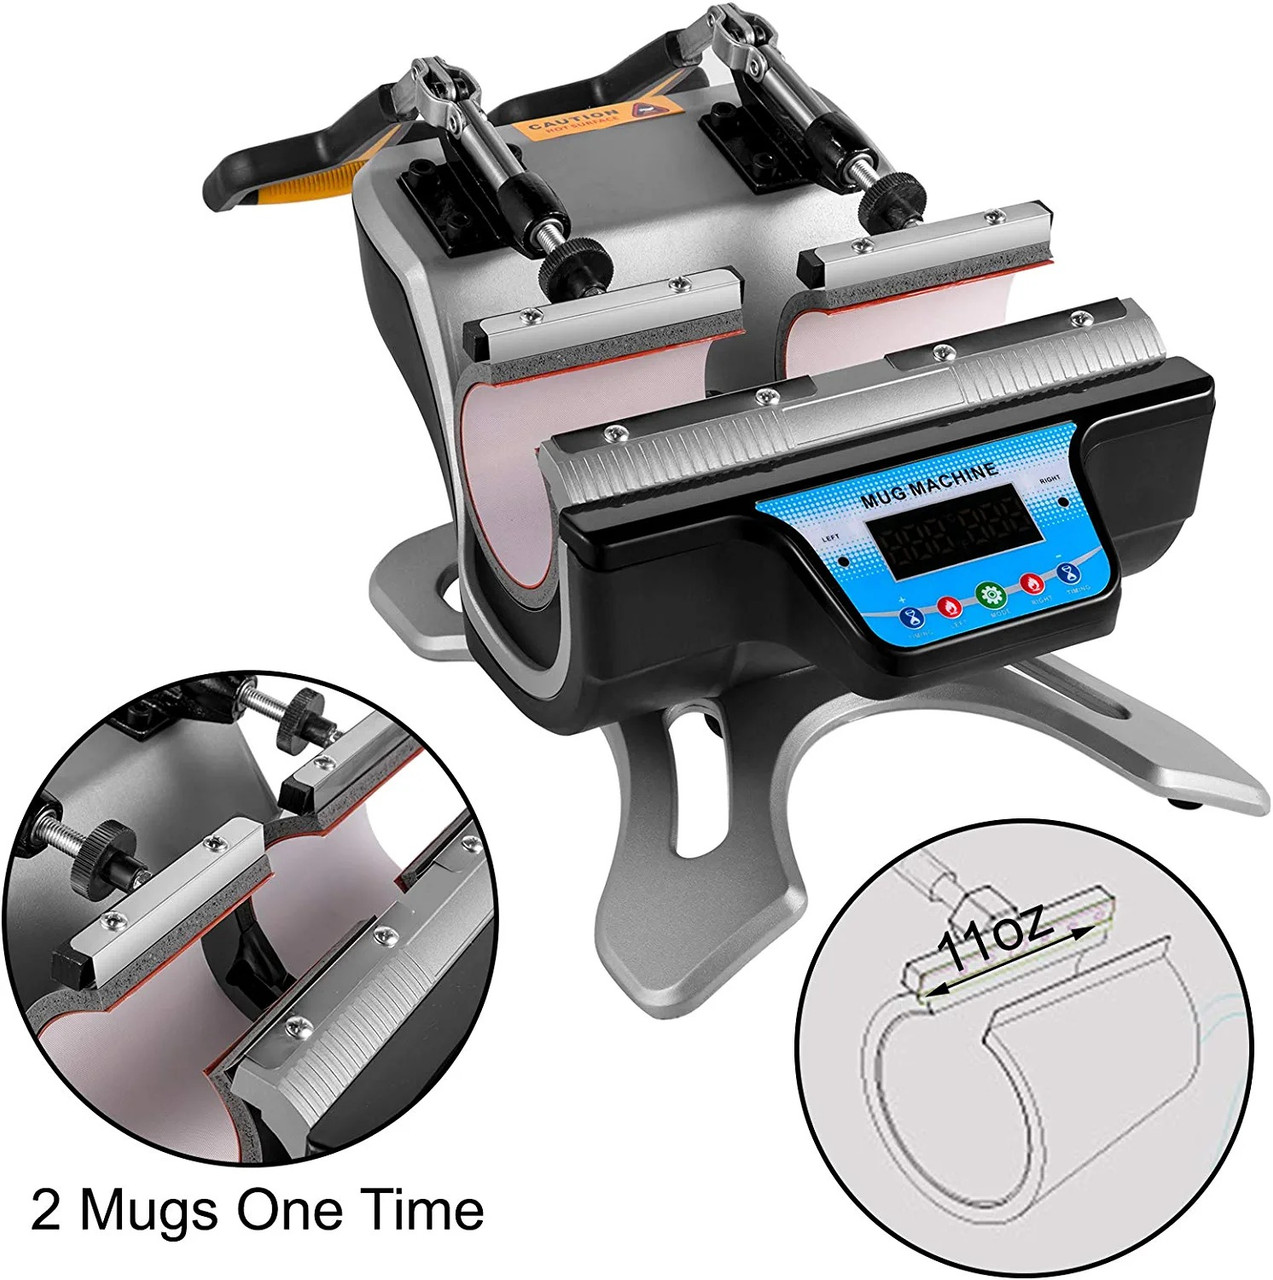 VEVOR Mug Heat Press, 20oz Tumbler Heat Press Machine, LCD Cup Press Machine with 2 Detachable Transfer Sublimation Mats for 1